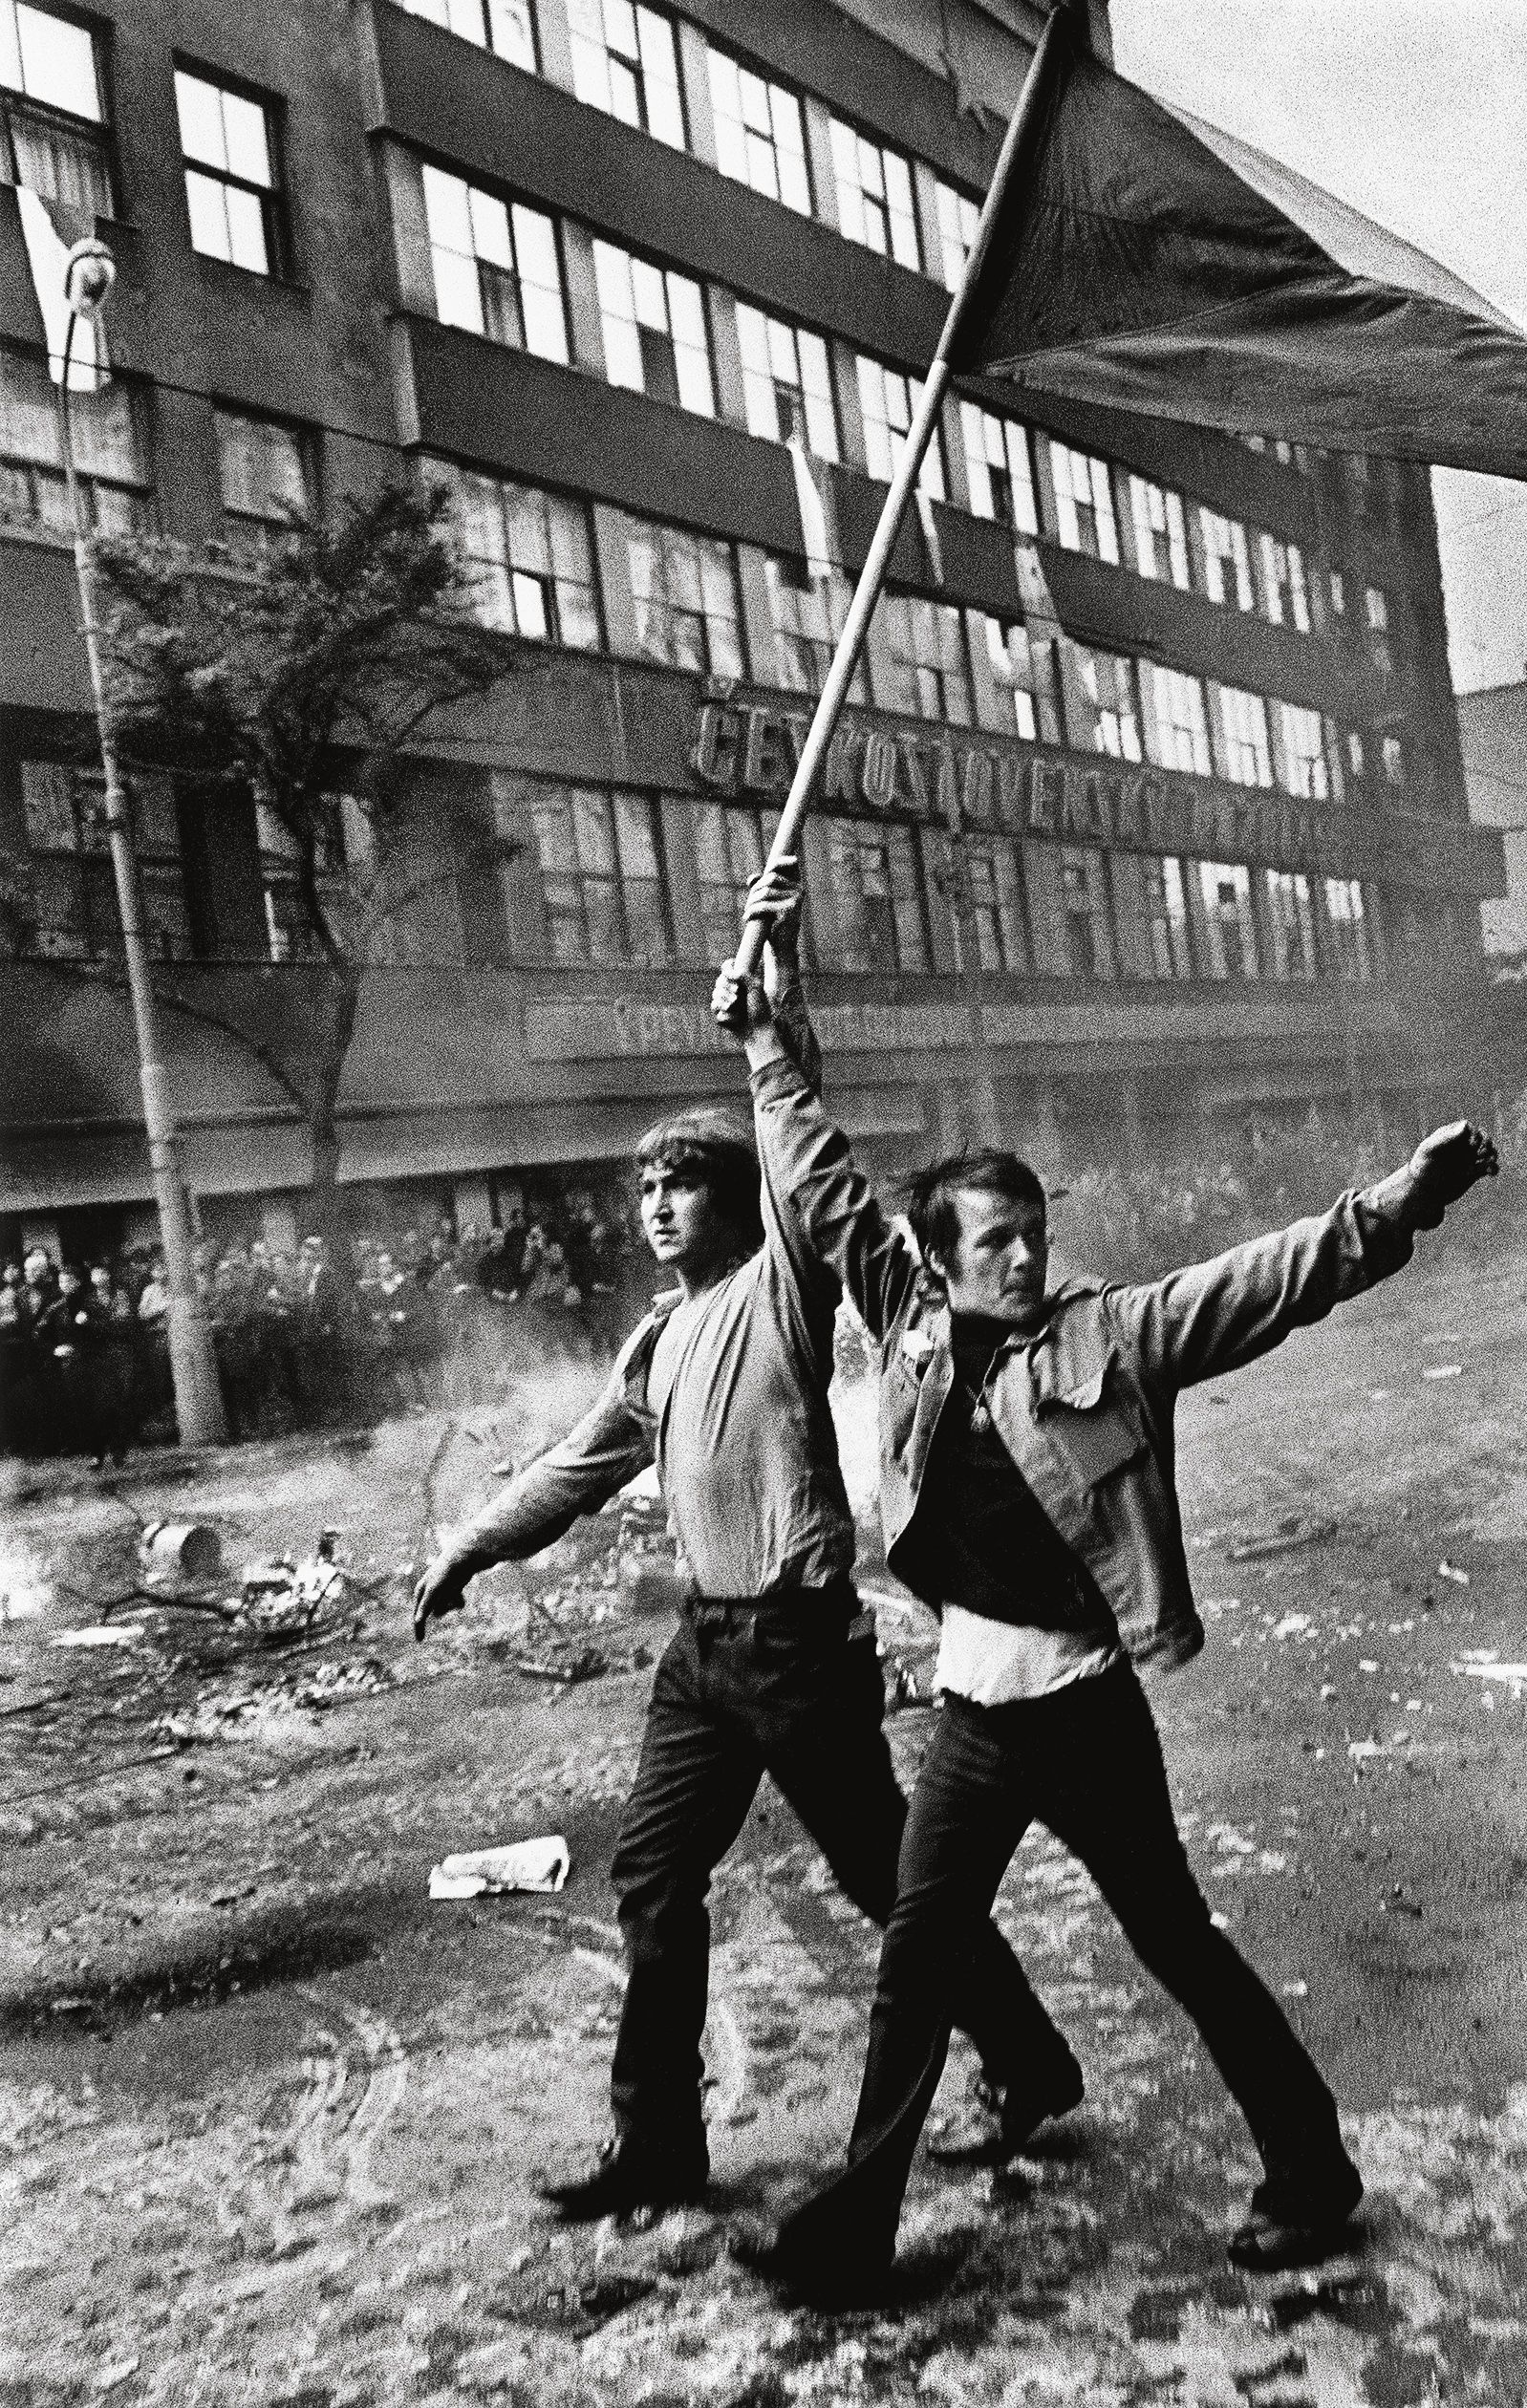 Koudelka: Invasion 1968 and Archival Footage by Jan Němec, Trade Fair Palace, Prague, 22 August 2018-6 January 2019